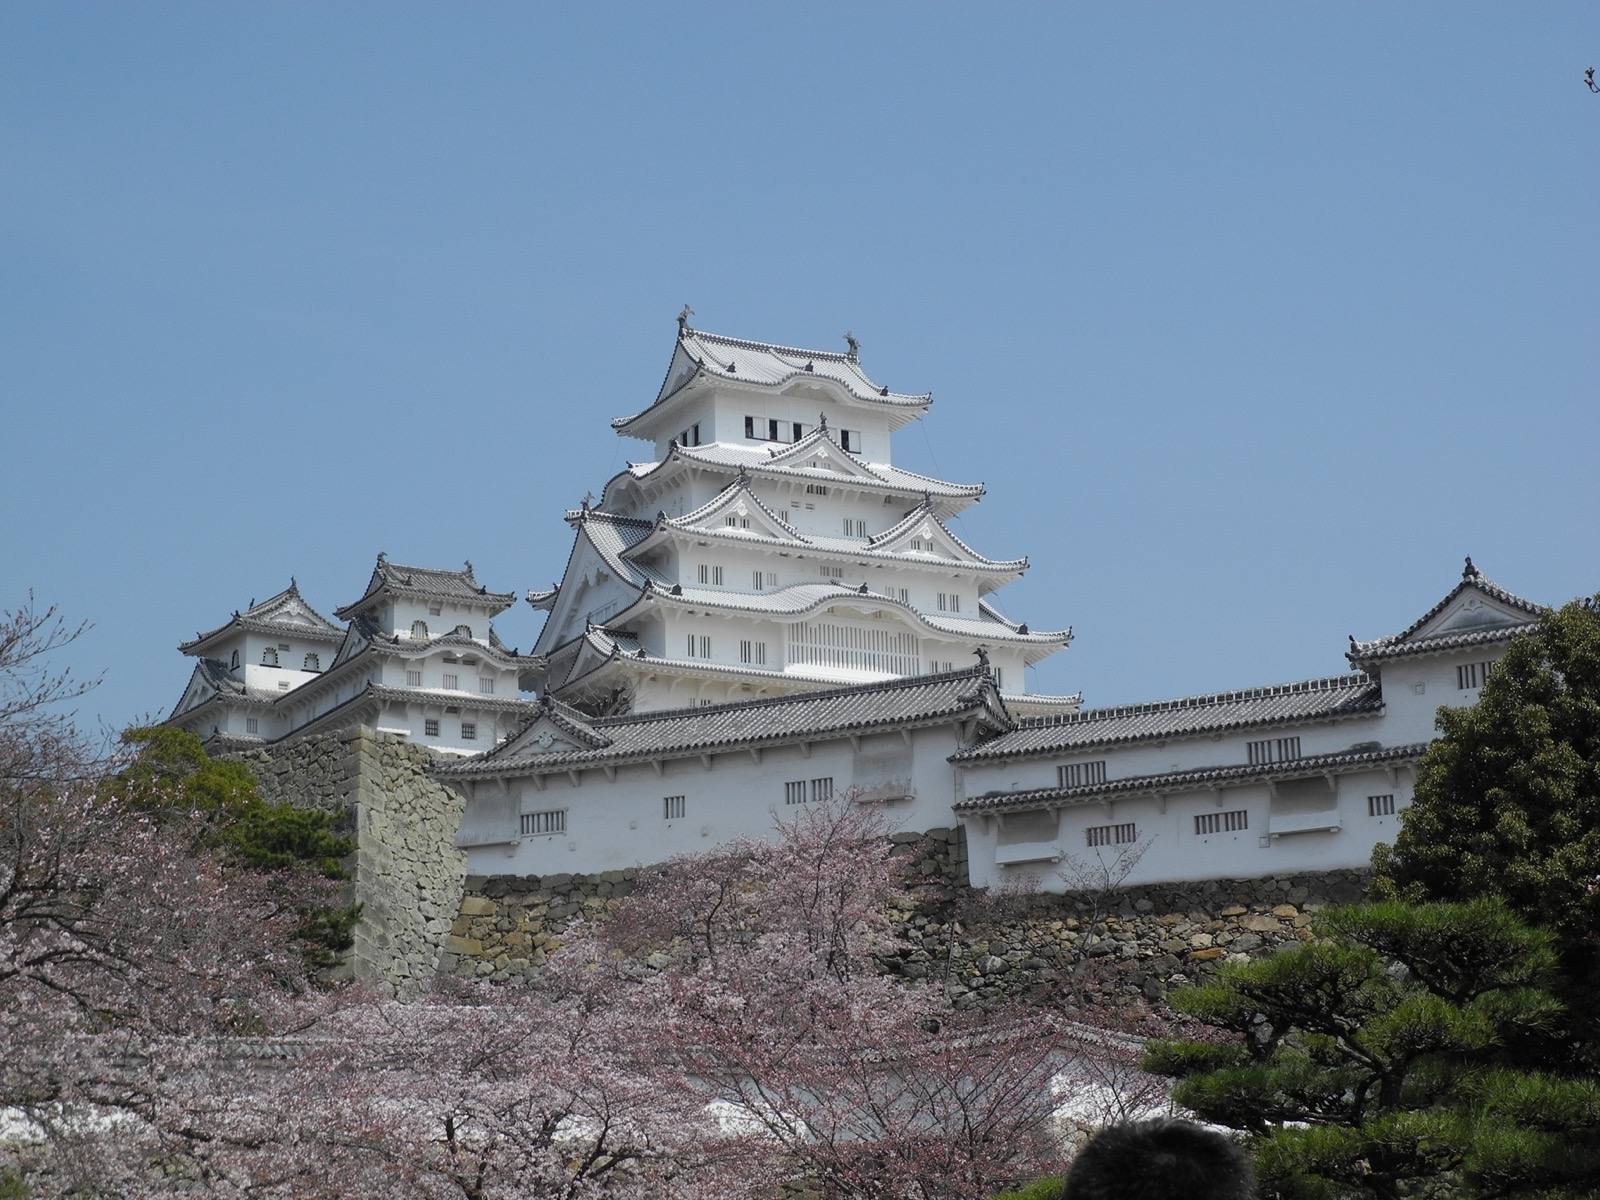 Photo of Himeji Castle Area, Japan (DSCN1255 by John Seb Barber)